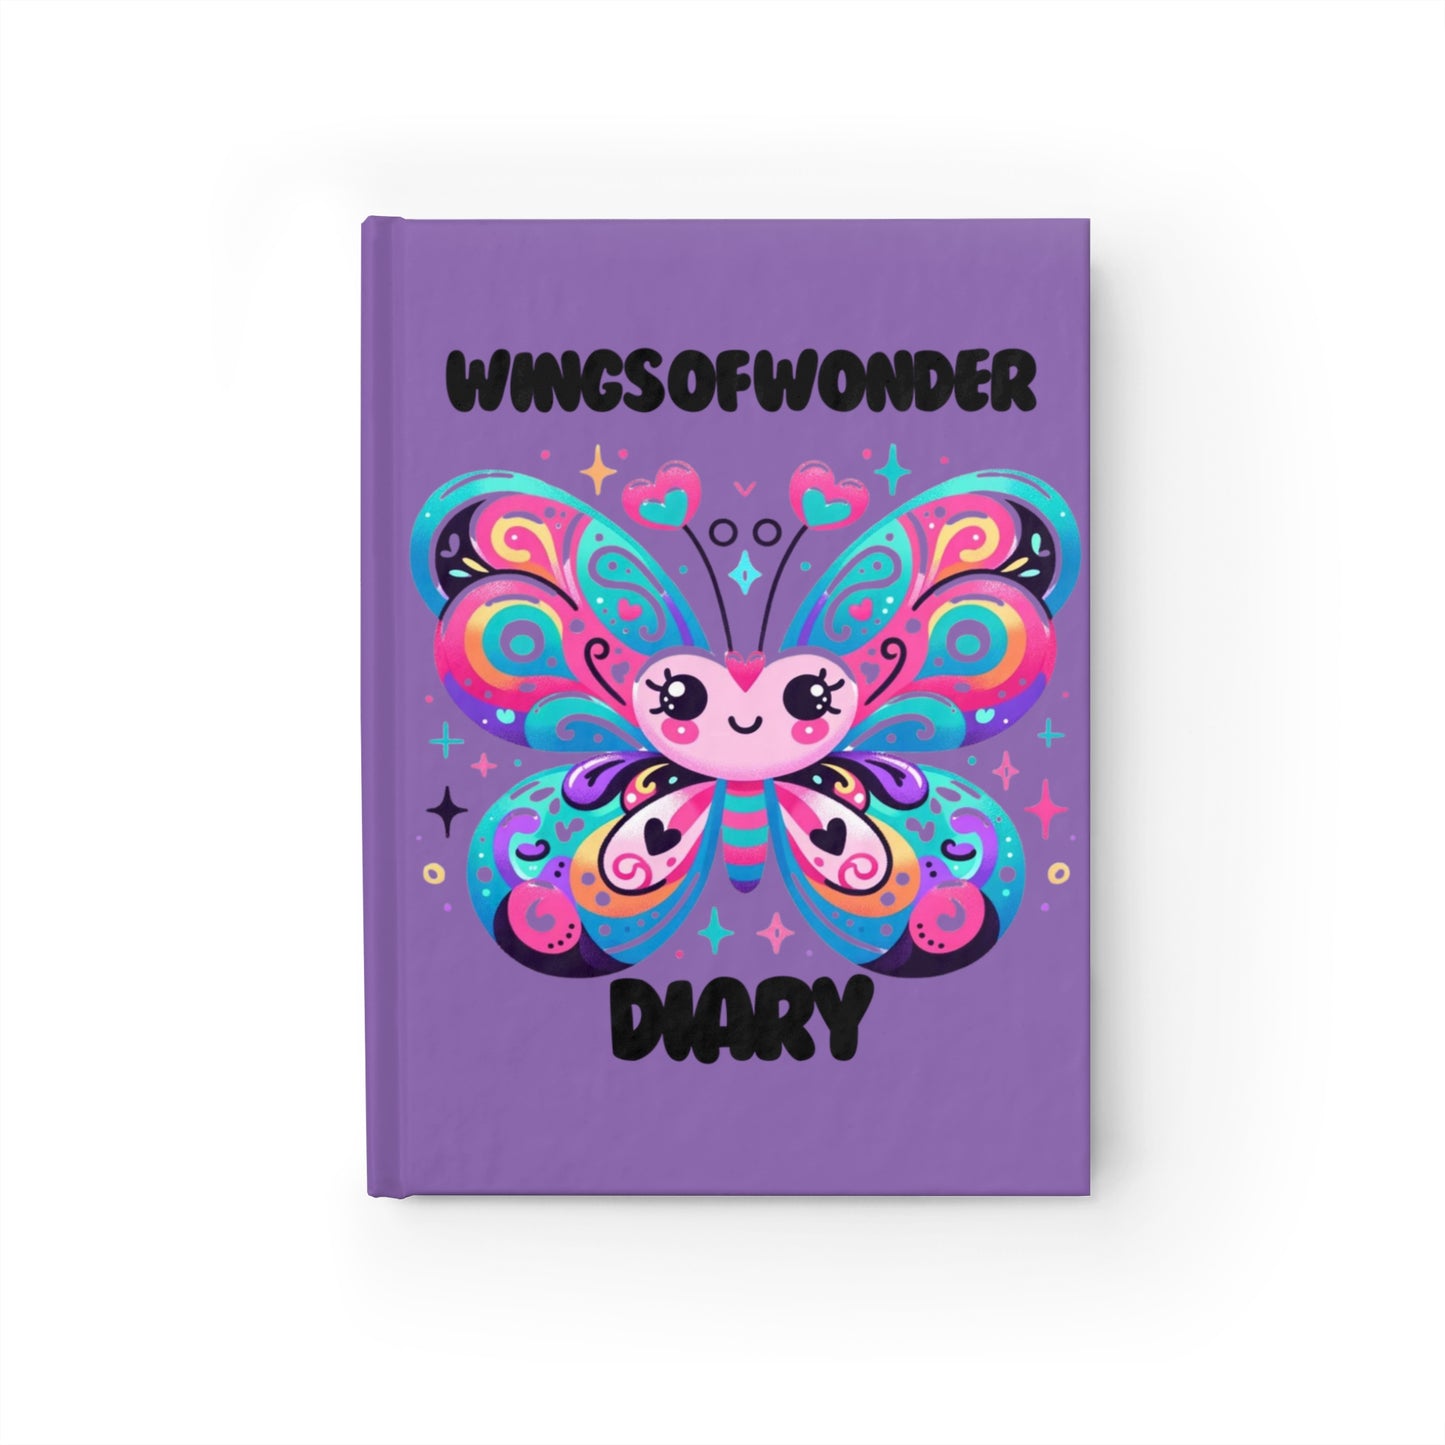 Wings of Wonder Diary, Joyous Life Journals